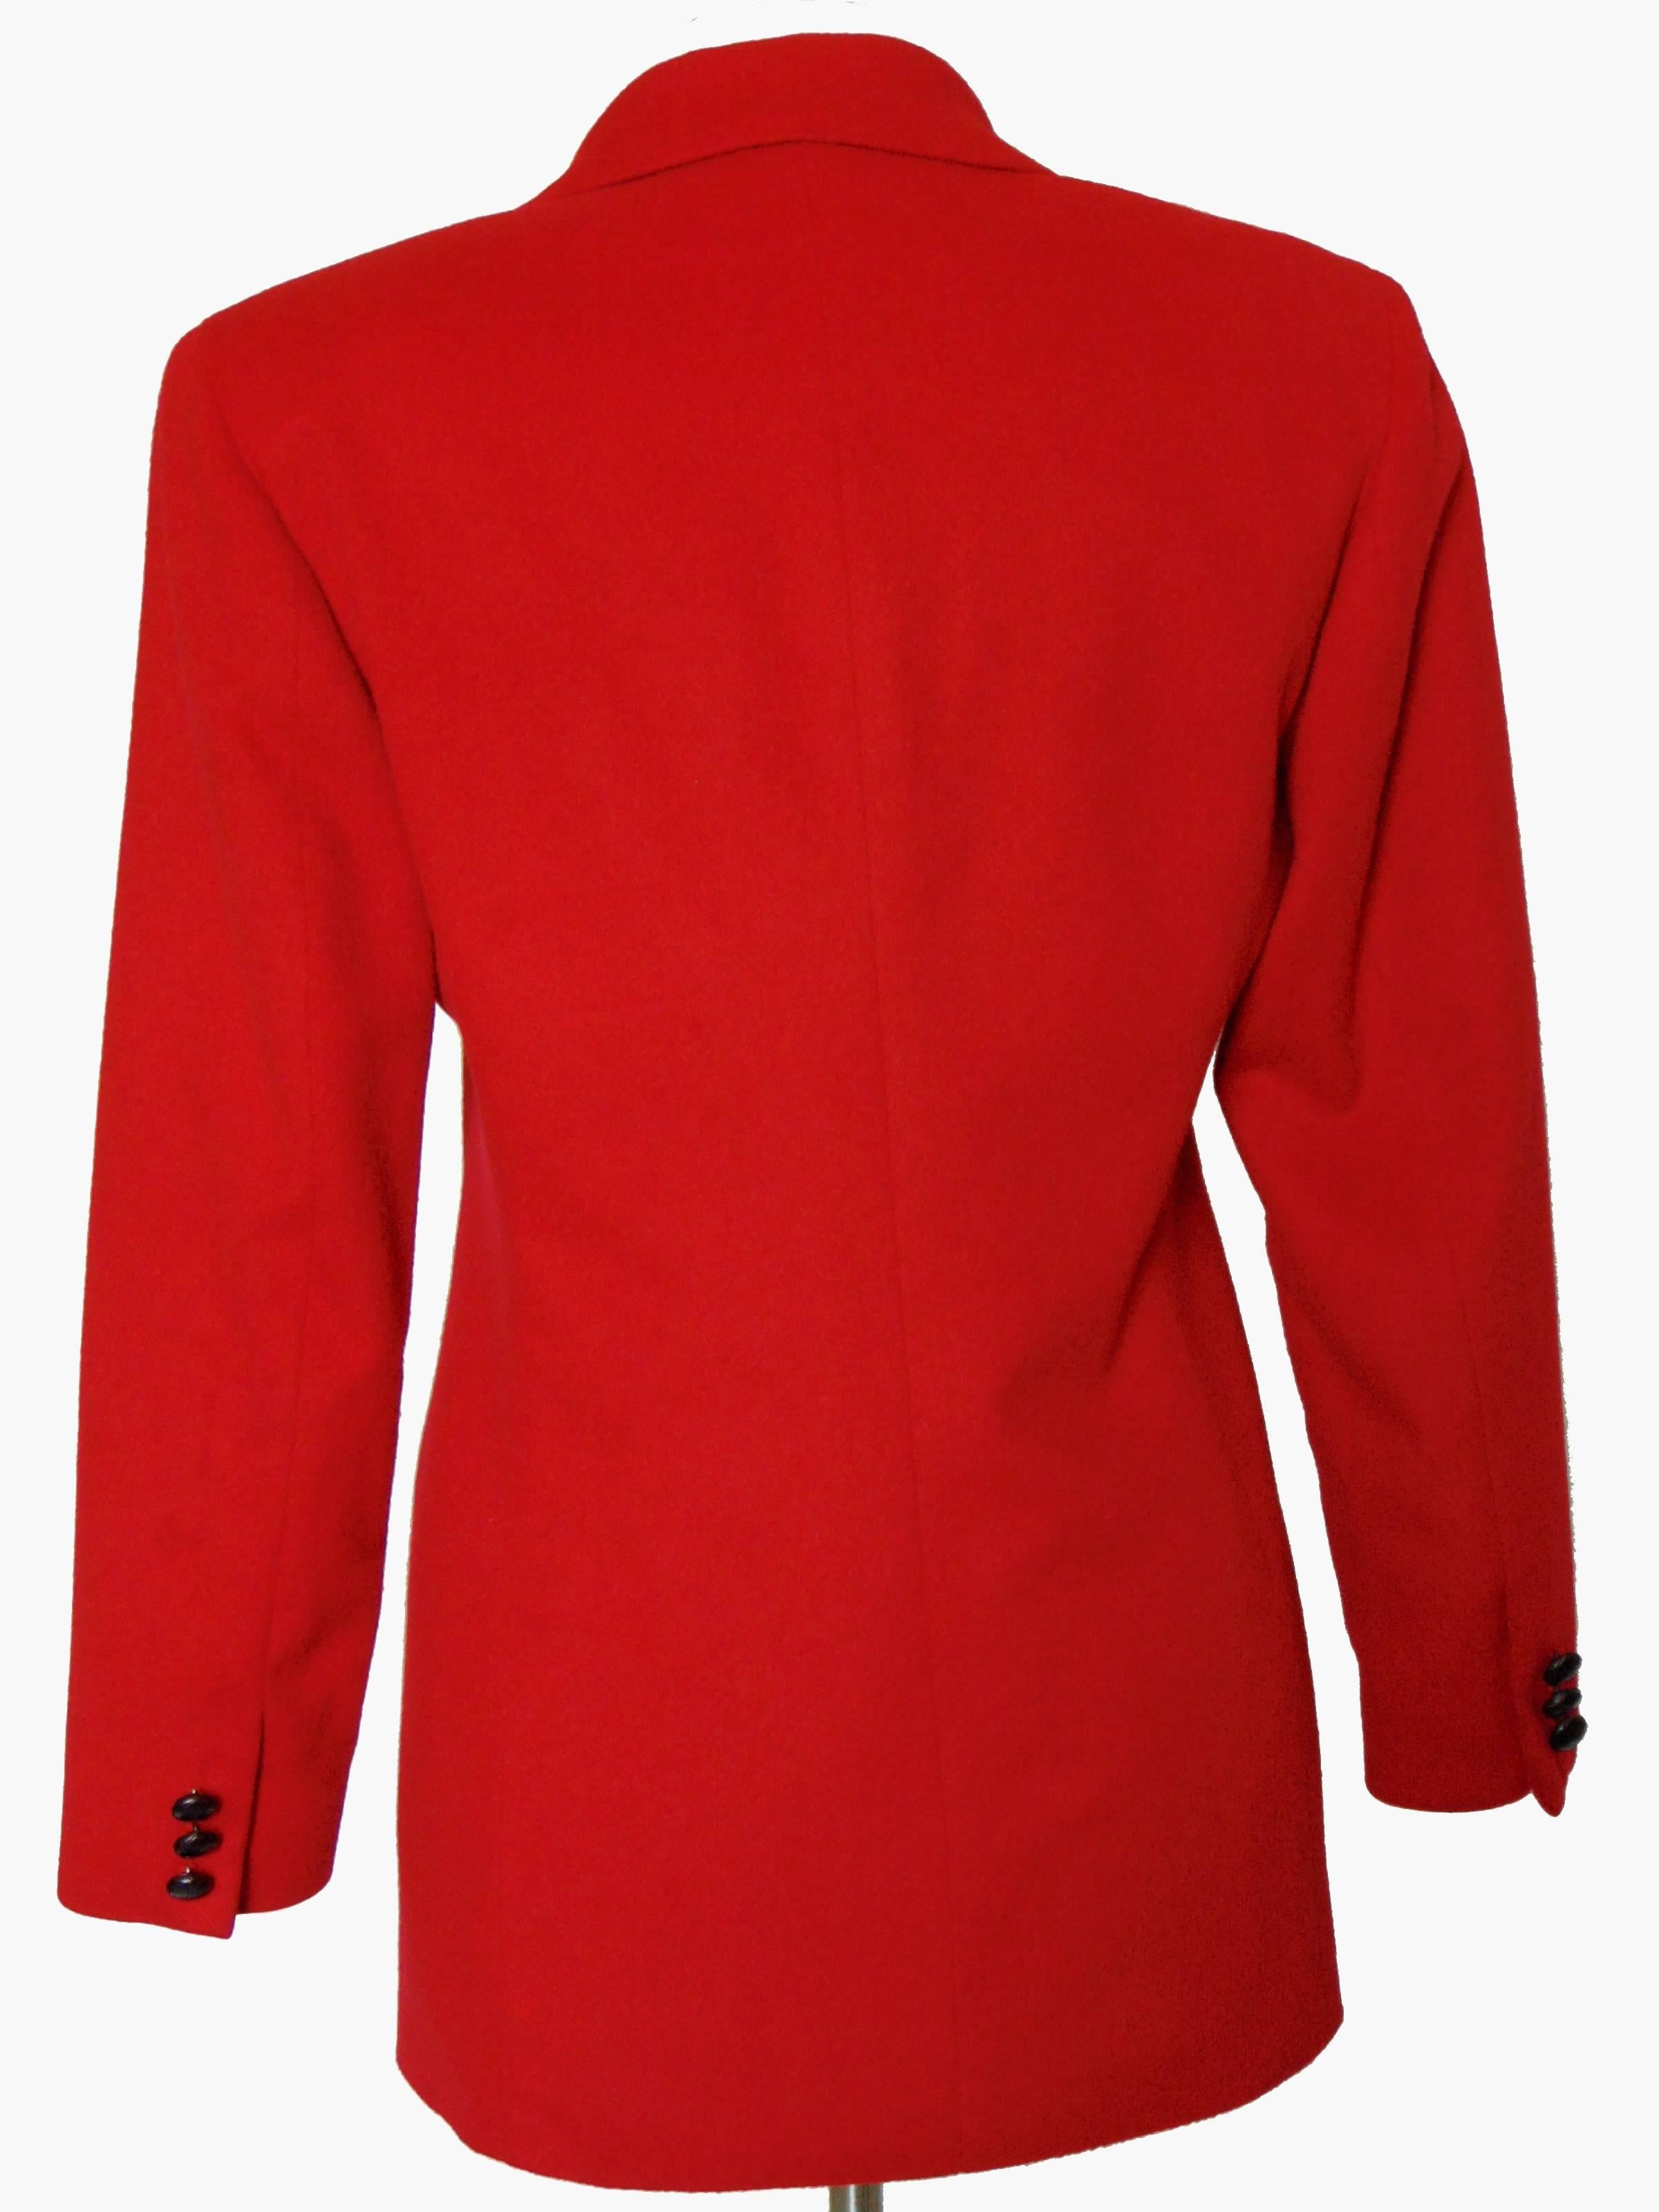 Burberrys Red Ladies Blazer Jacket Cashmere Wool Size 4 1980s 1